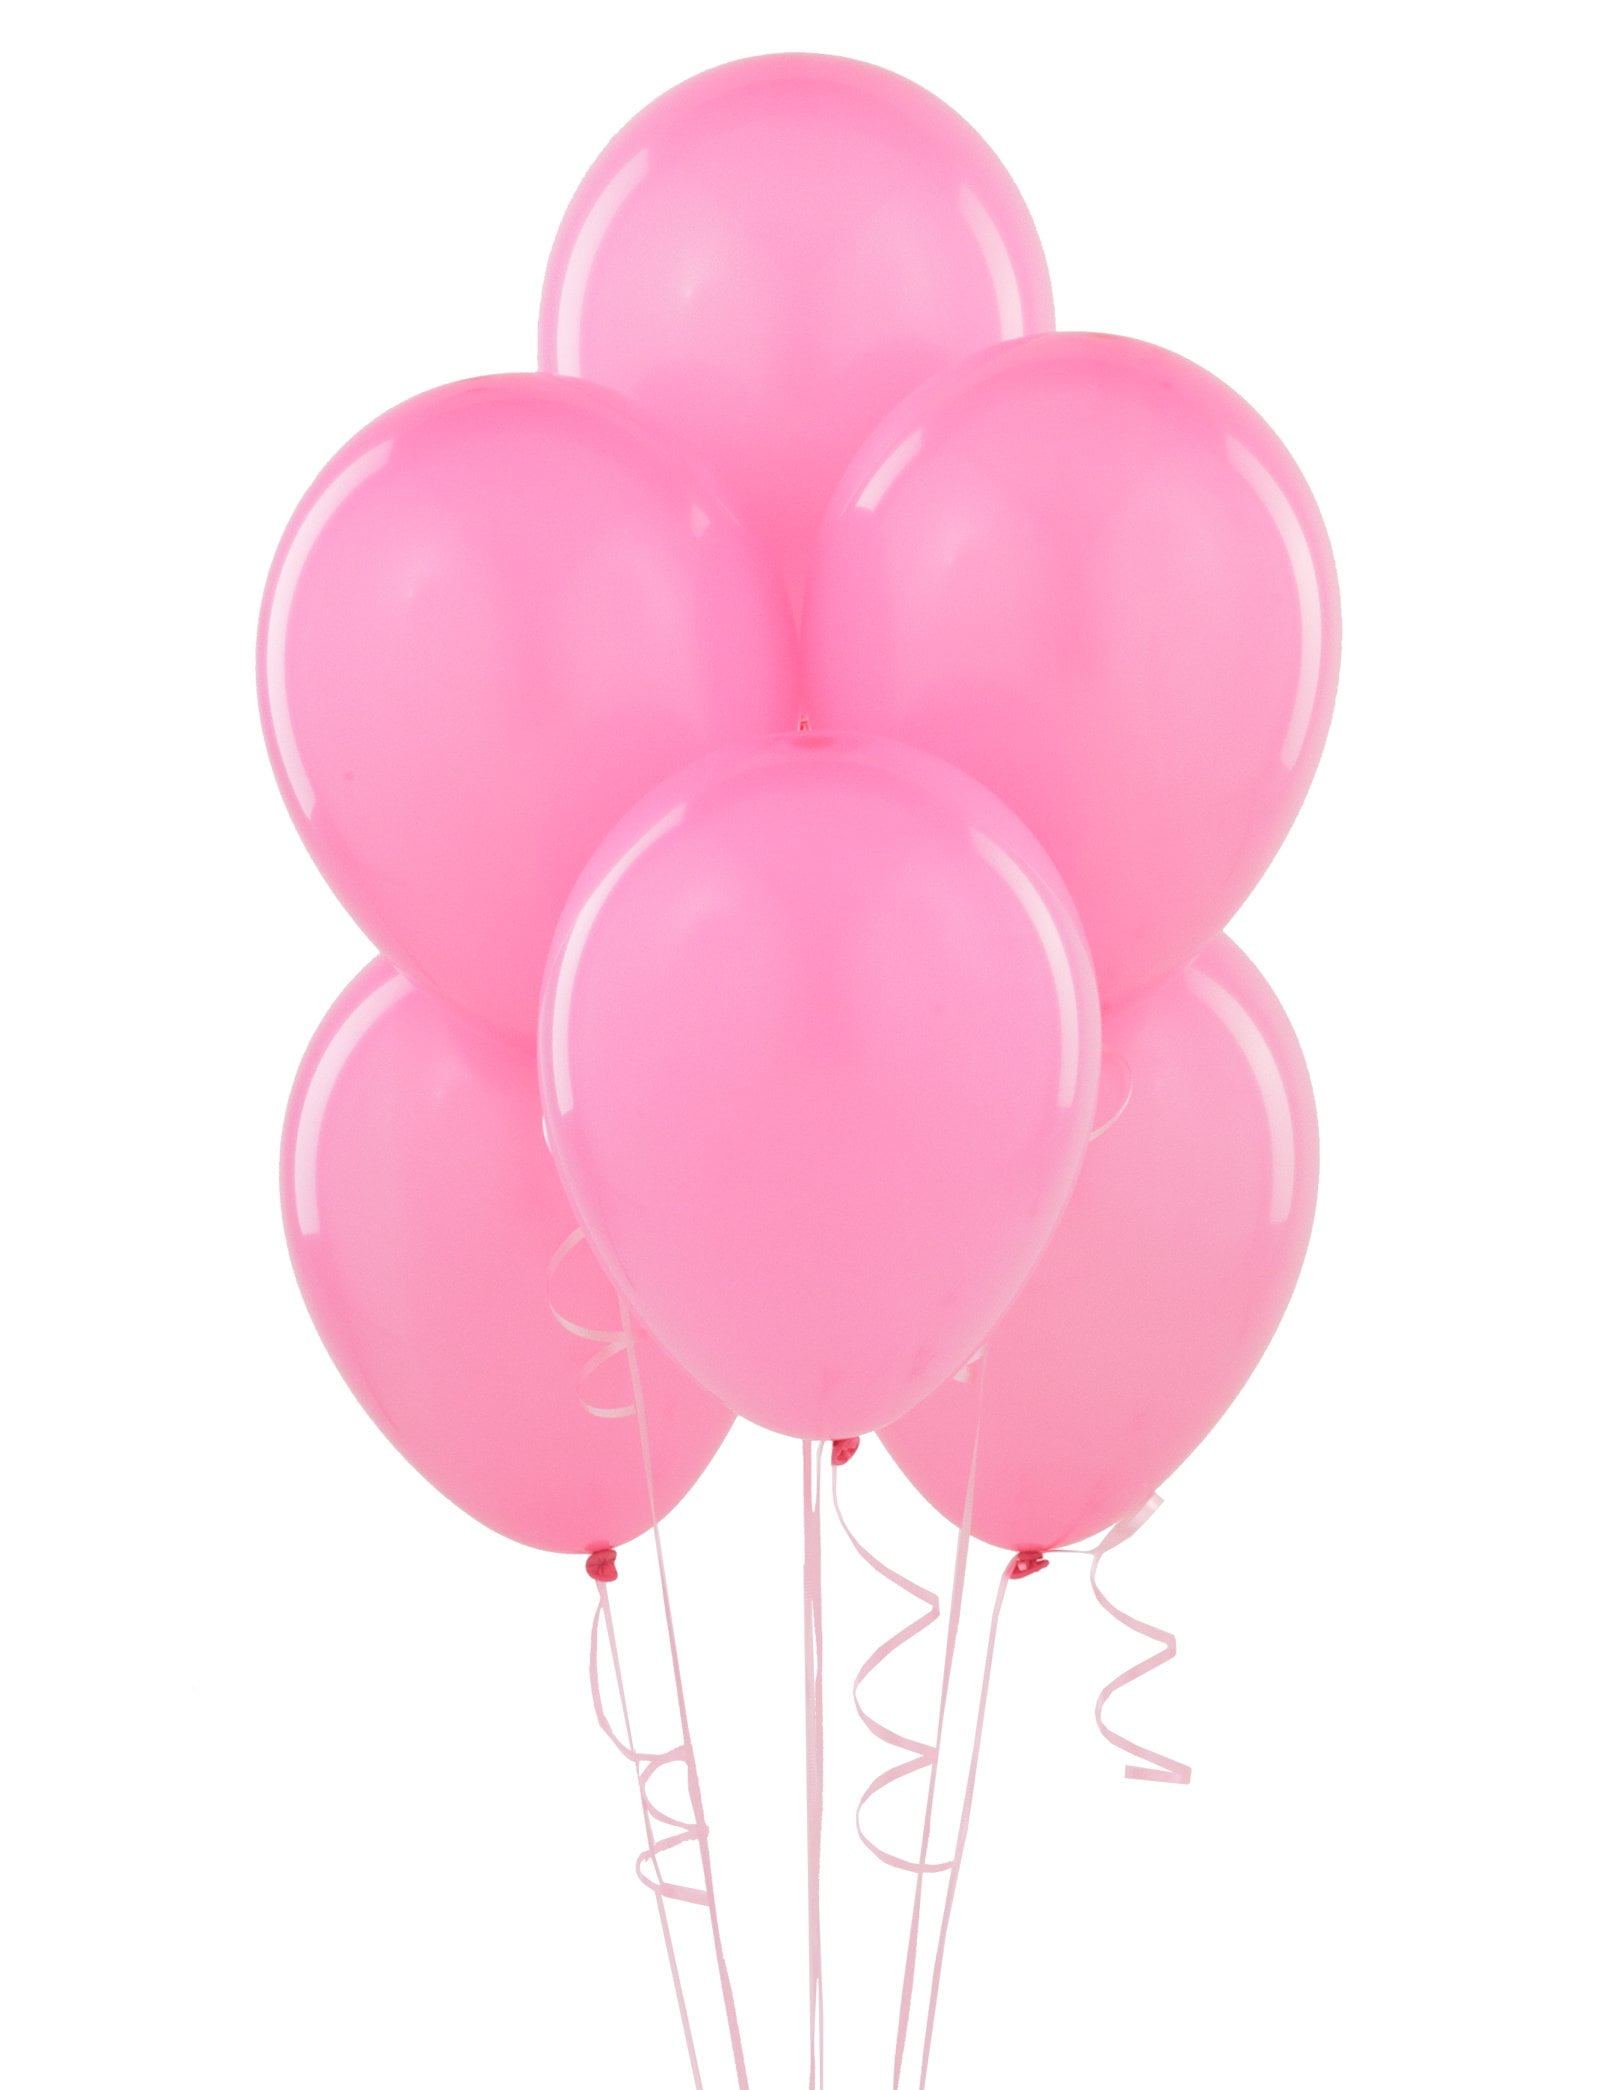 Про розовый шарик. Воздушный шарик. Розовые шарики. Красные шары. Розовые шарики воздушные.